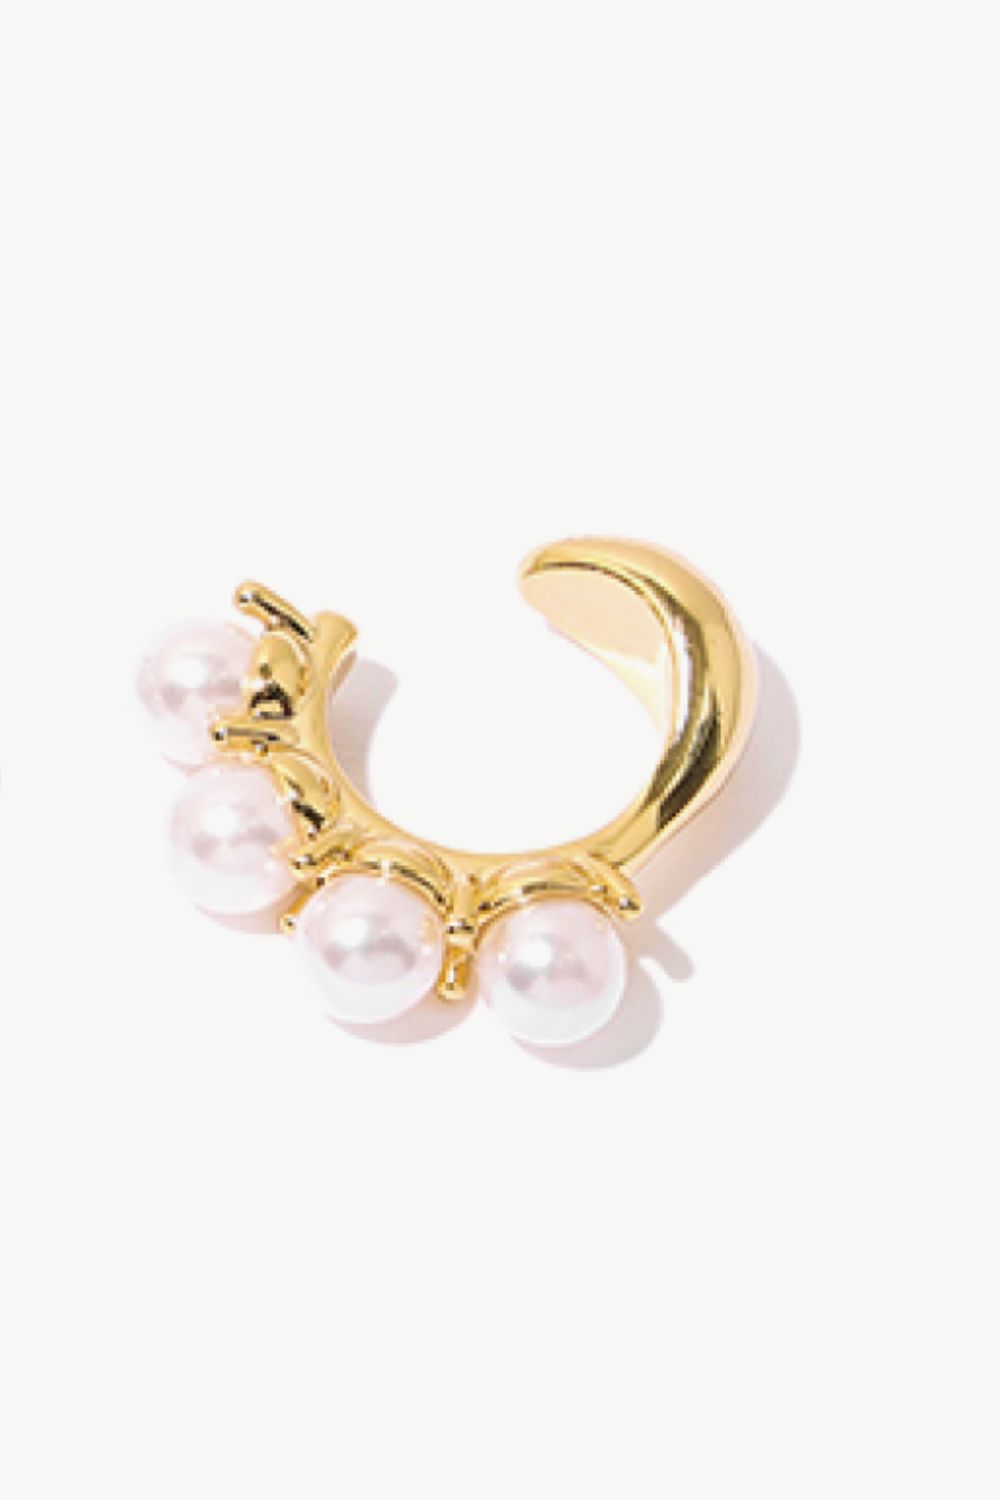 18K Gold Plated Ear Cuff Earring - GlamZation